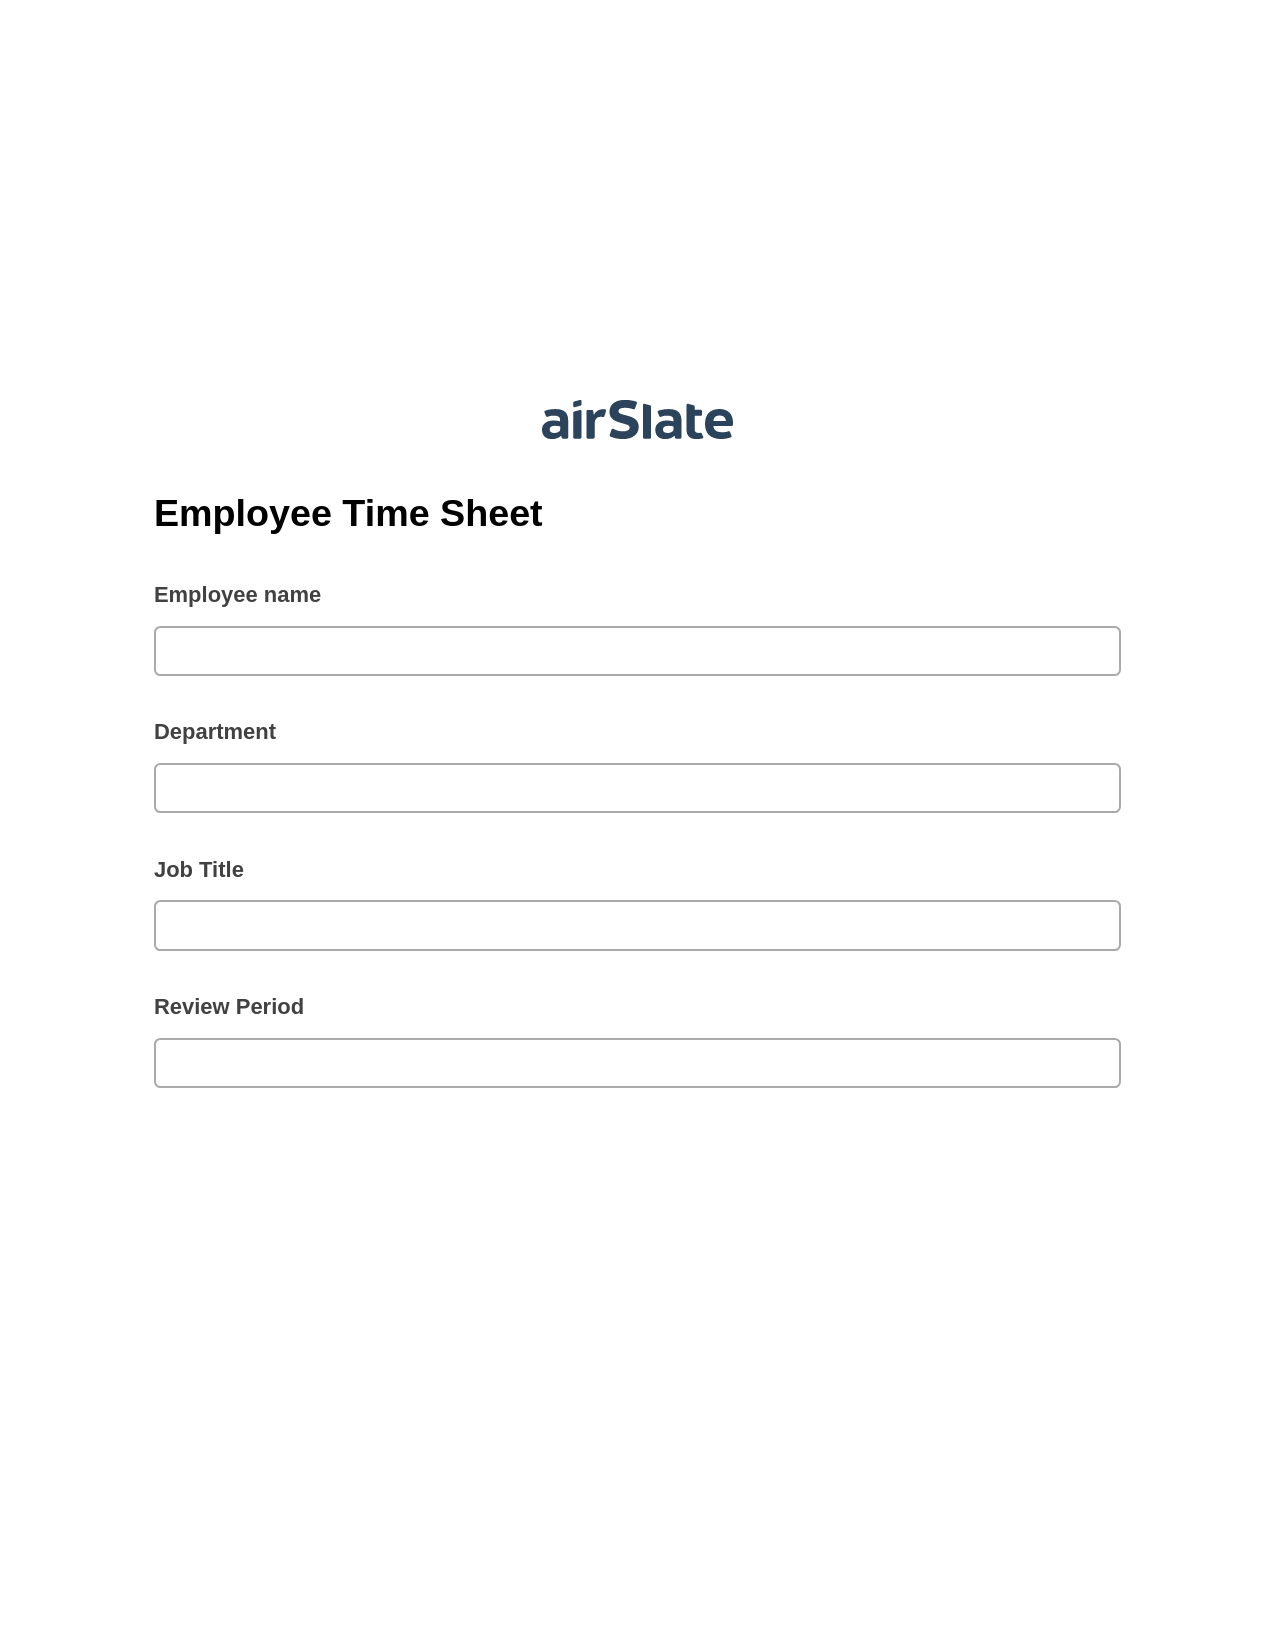 Employee Time Sheet Prefill from NetSuite records, Update Audit Trail Bot, Webhook Postfinish Bot